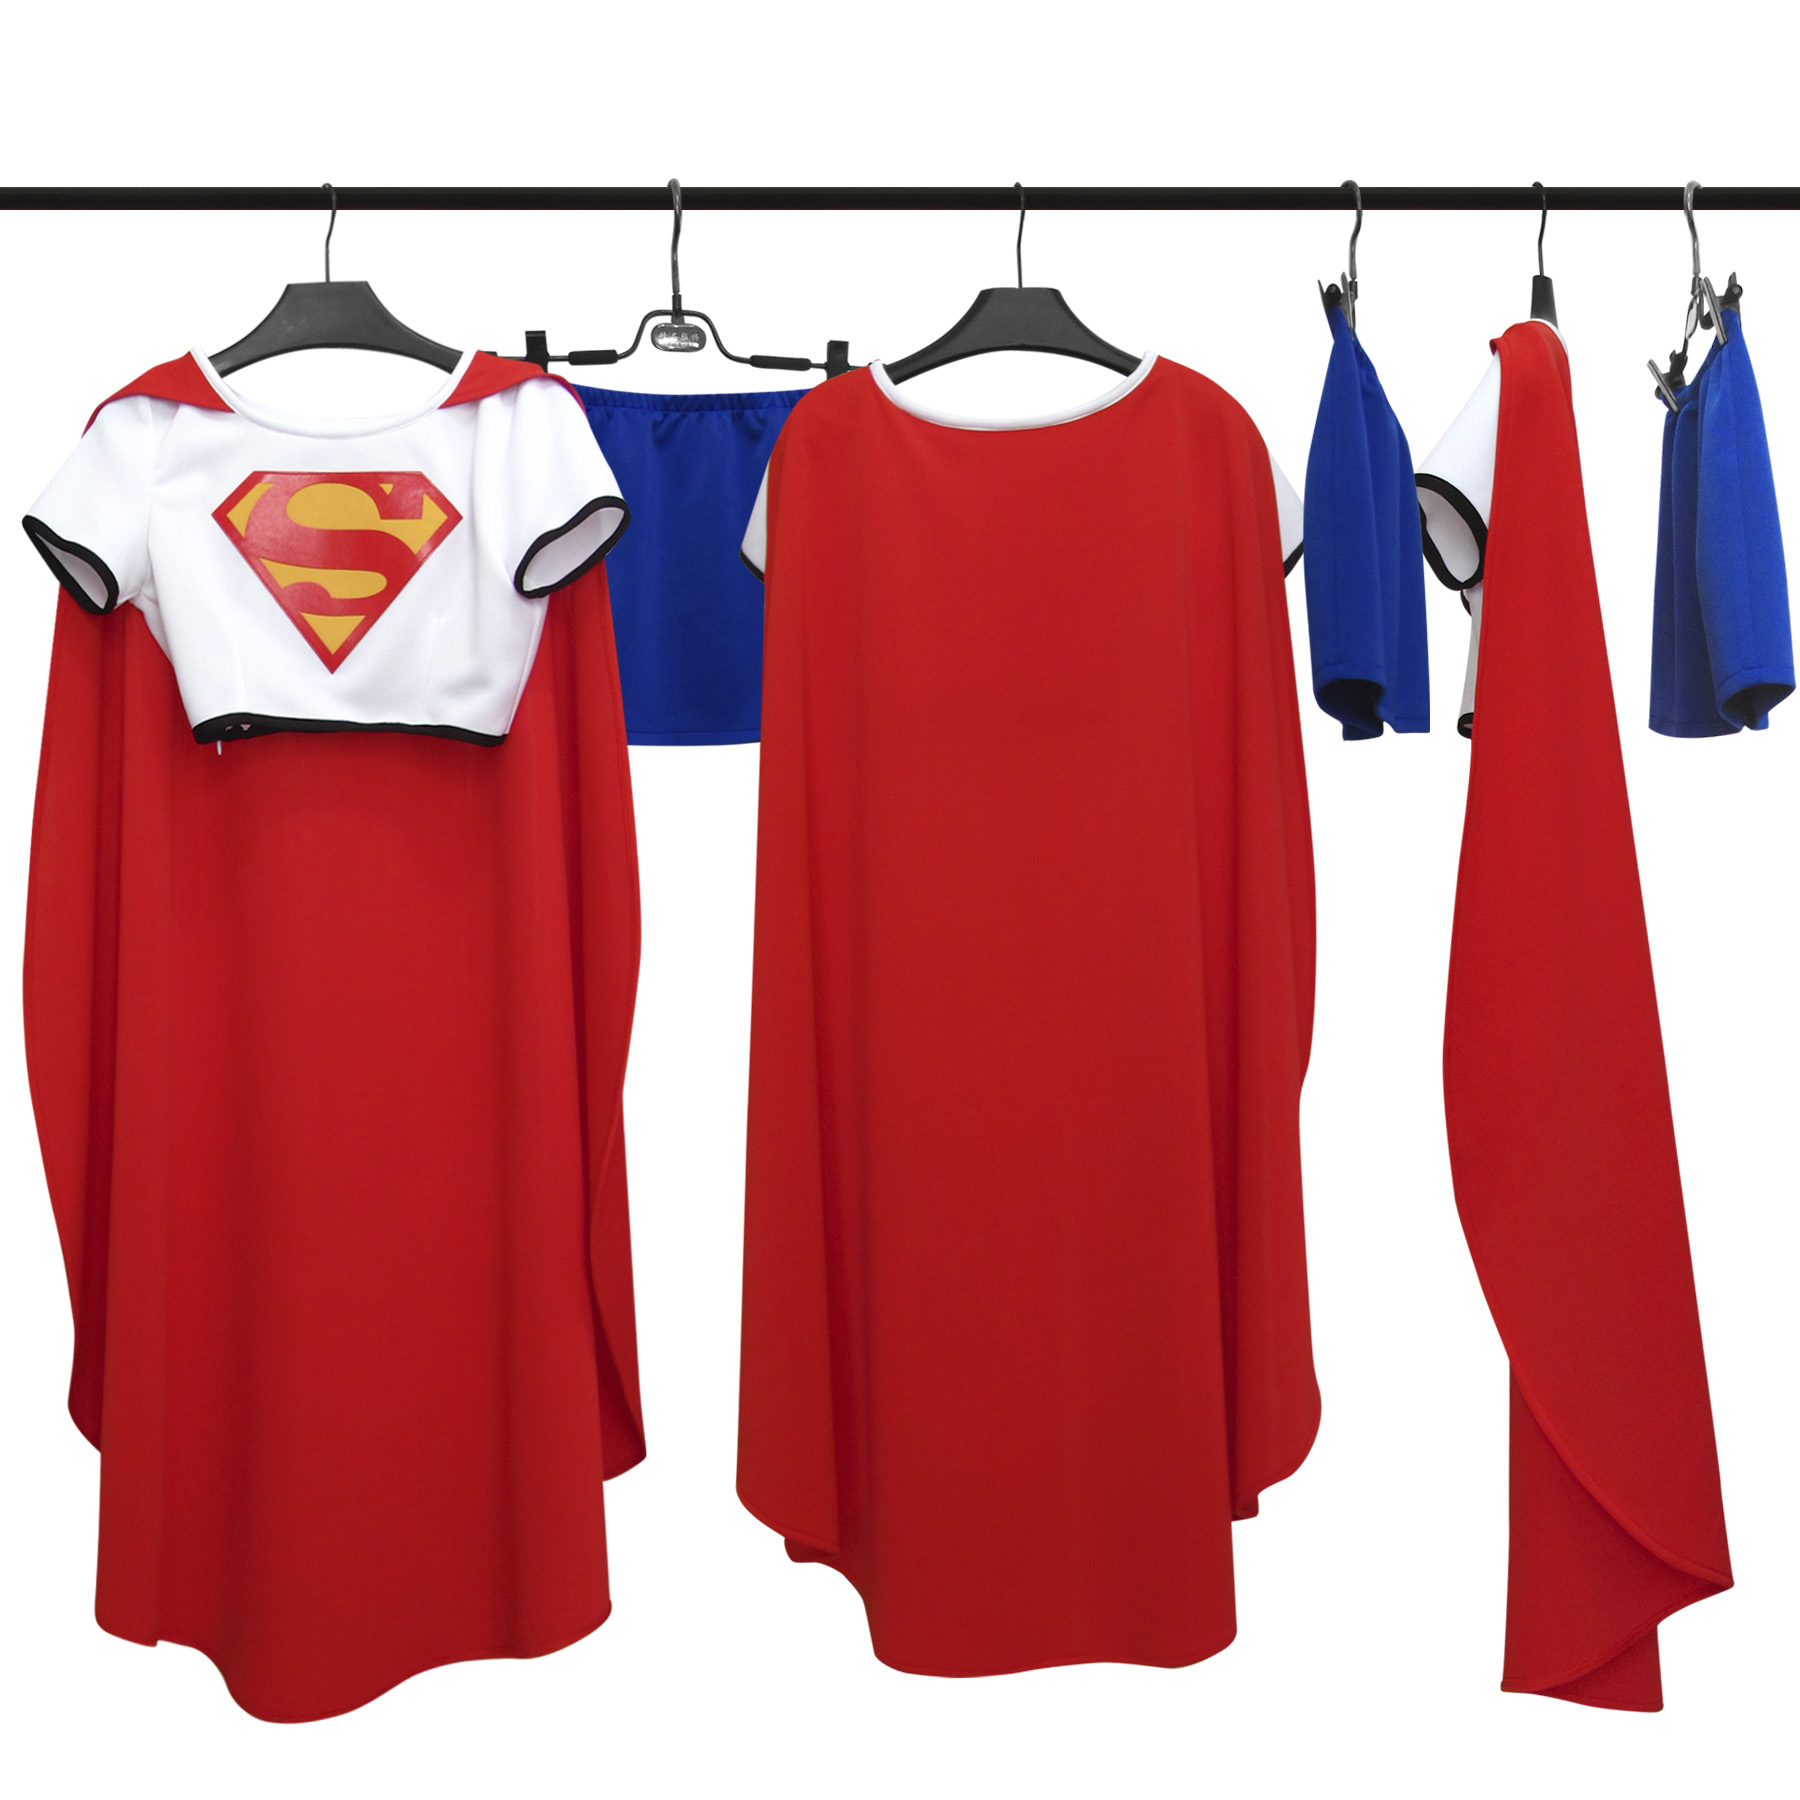 DC漫画电影超女cos服 女超人动漫超级英雄supergirl cosplay服装